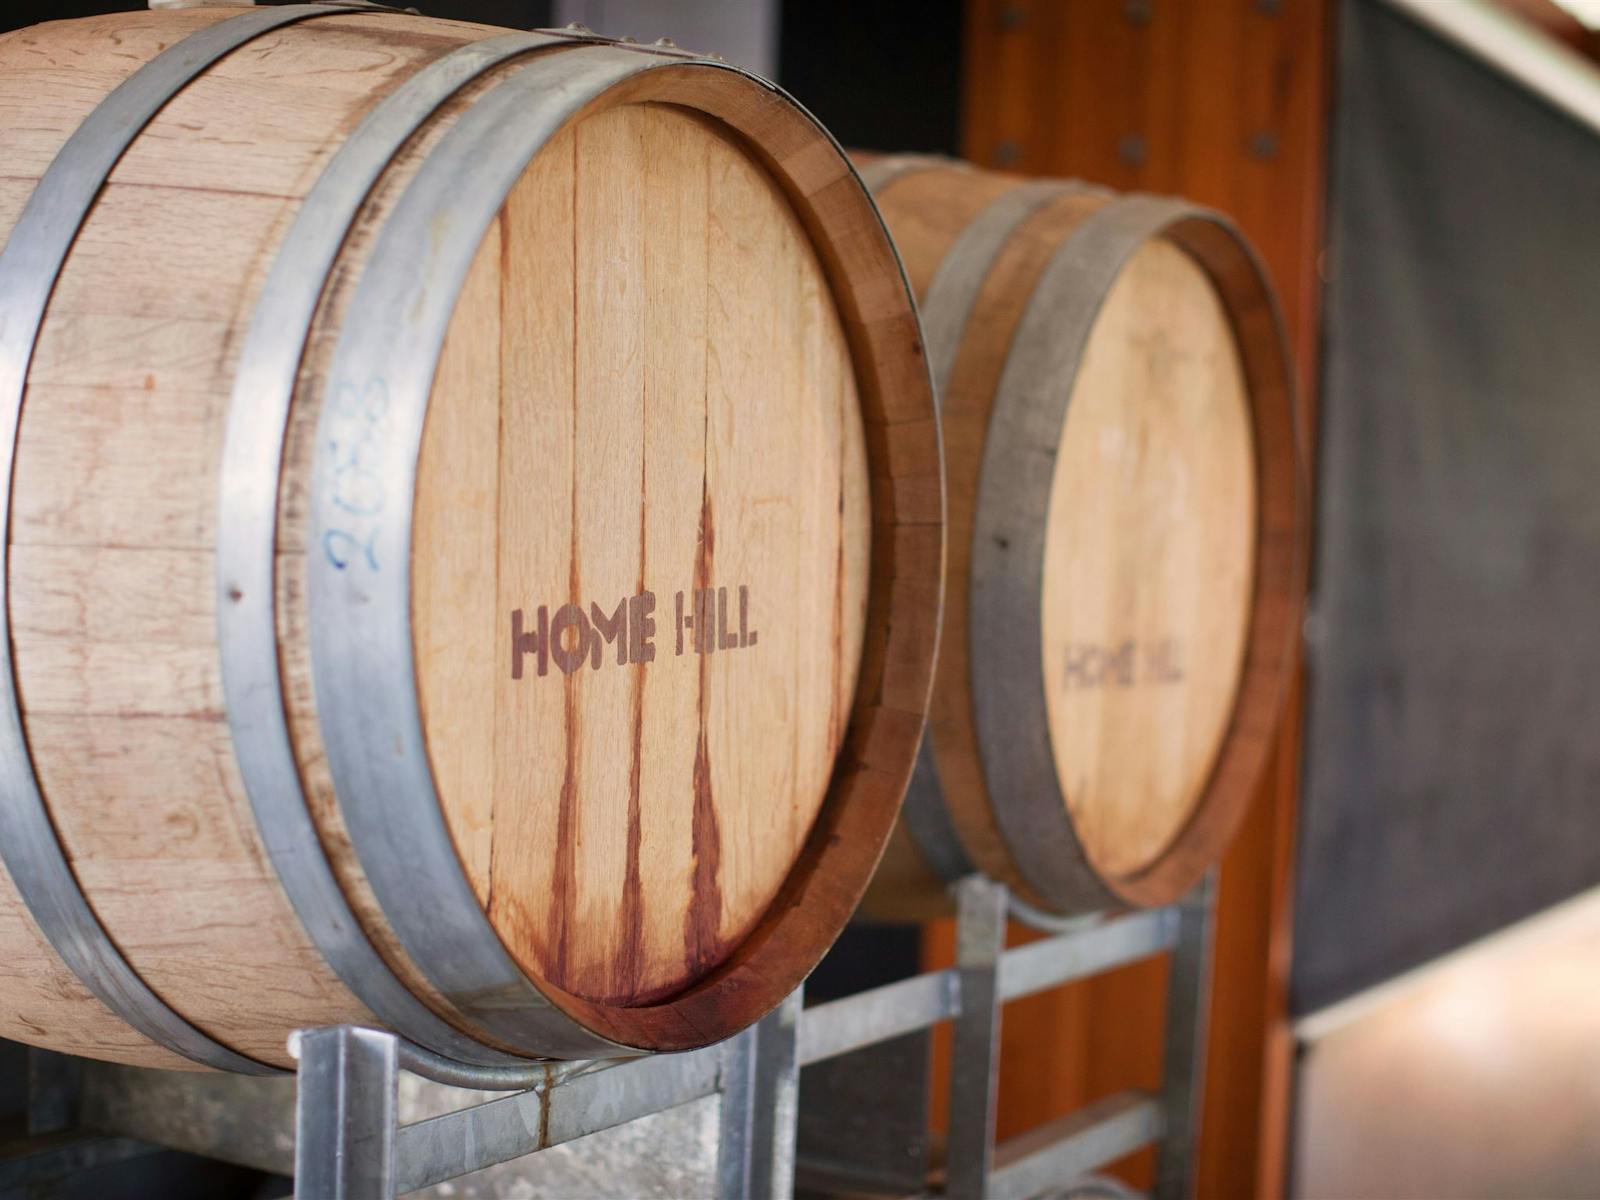 Home Hill wine barrels